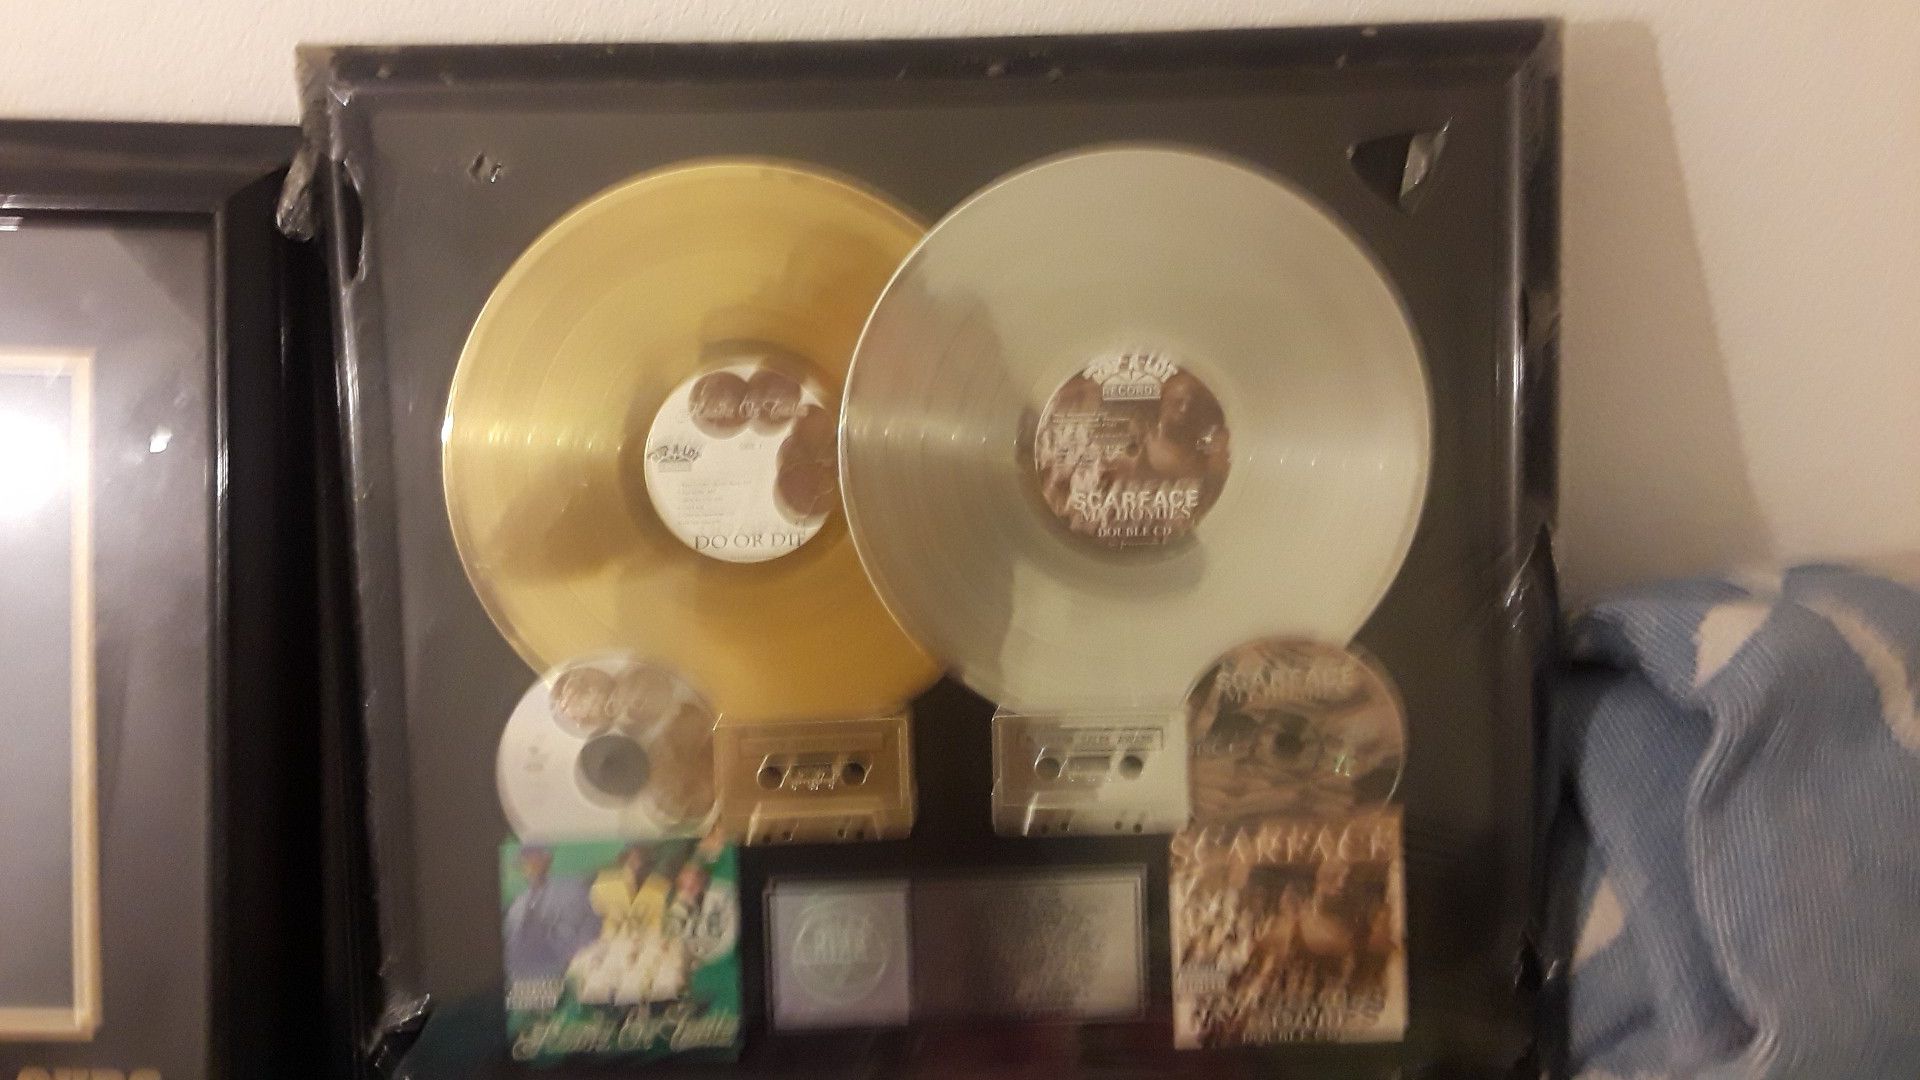 Gold/Platnium Records Murder dog Magazine honors